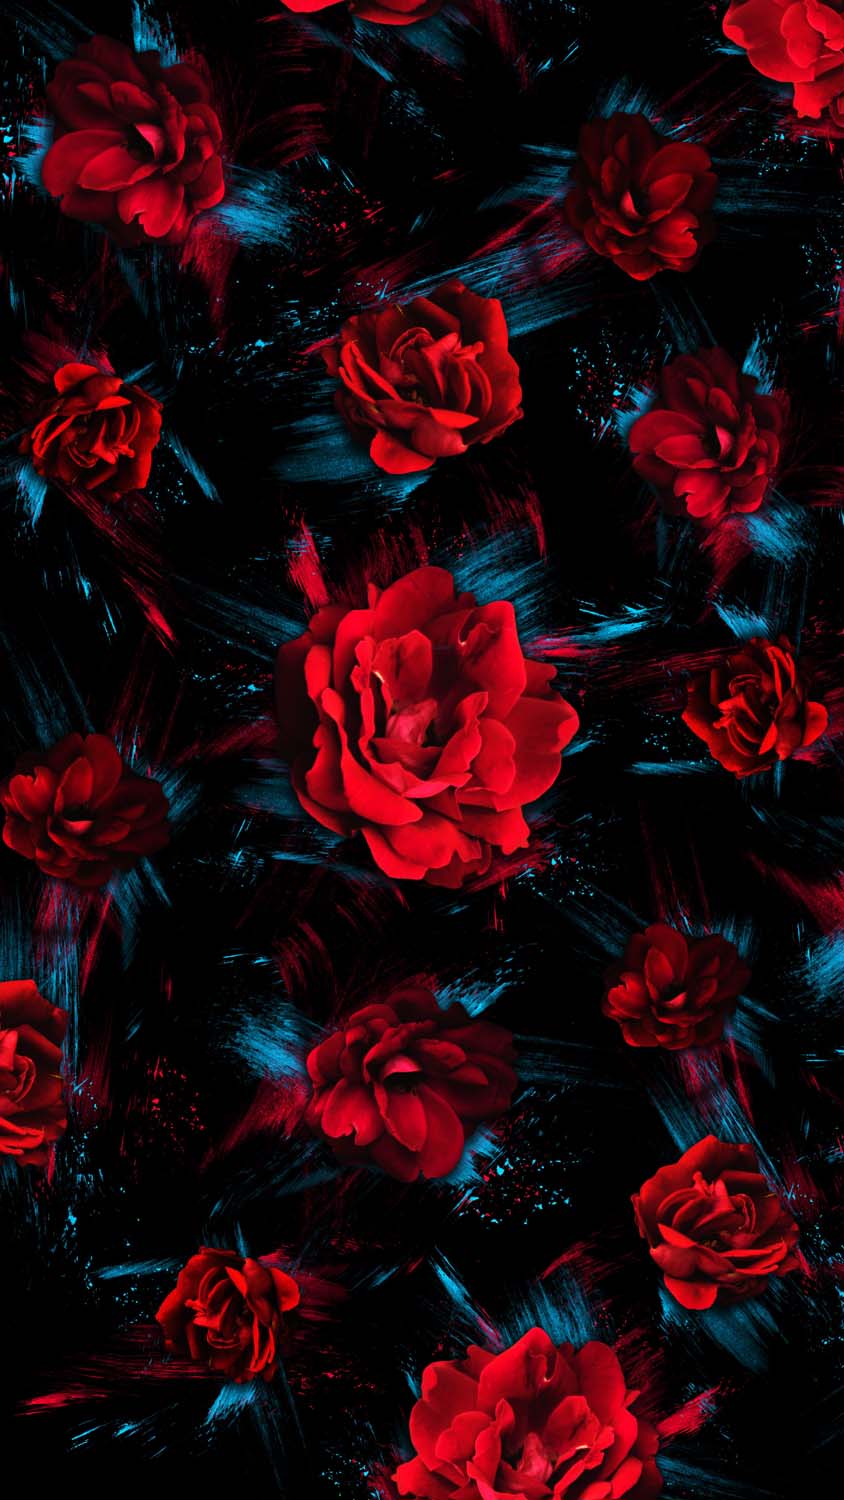 Red Flower Art IPhone Wallpaper HD - IPhone Wallpapers : iPhone Wallpapers